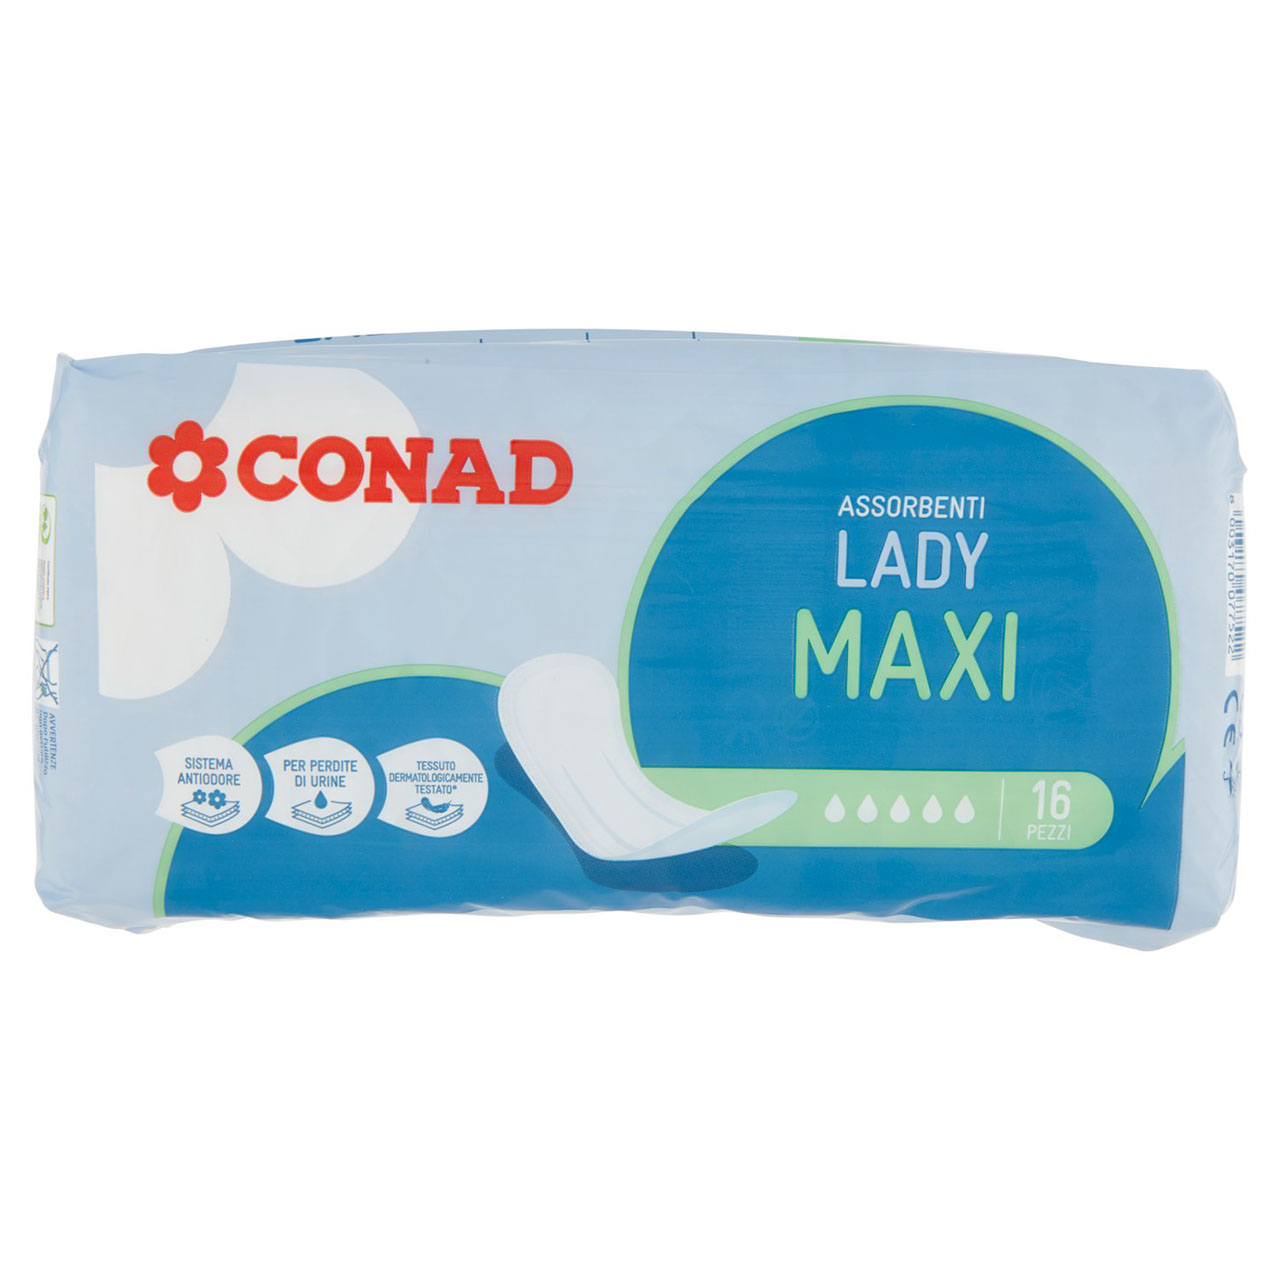 Assorbenti Lady Maxi 16 pz Conad in vendita online